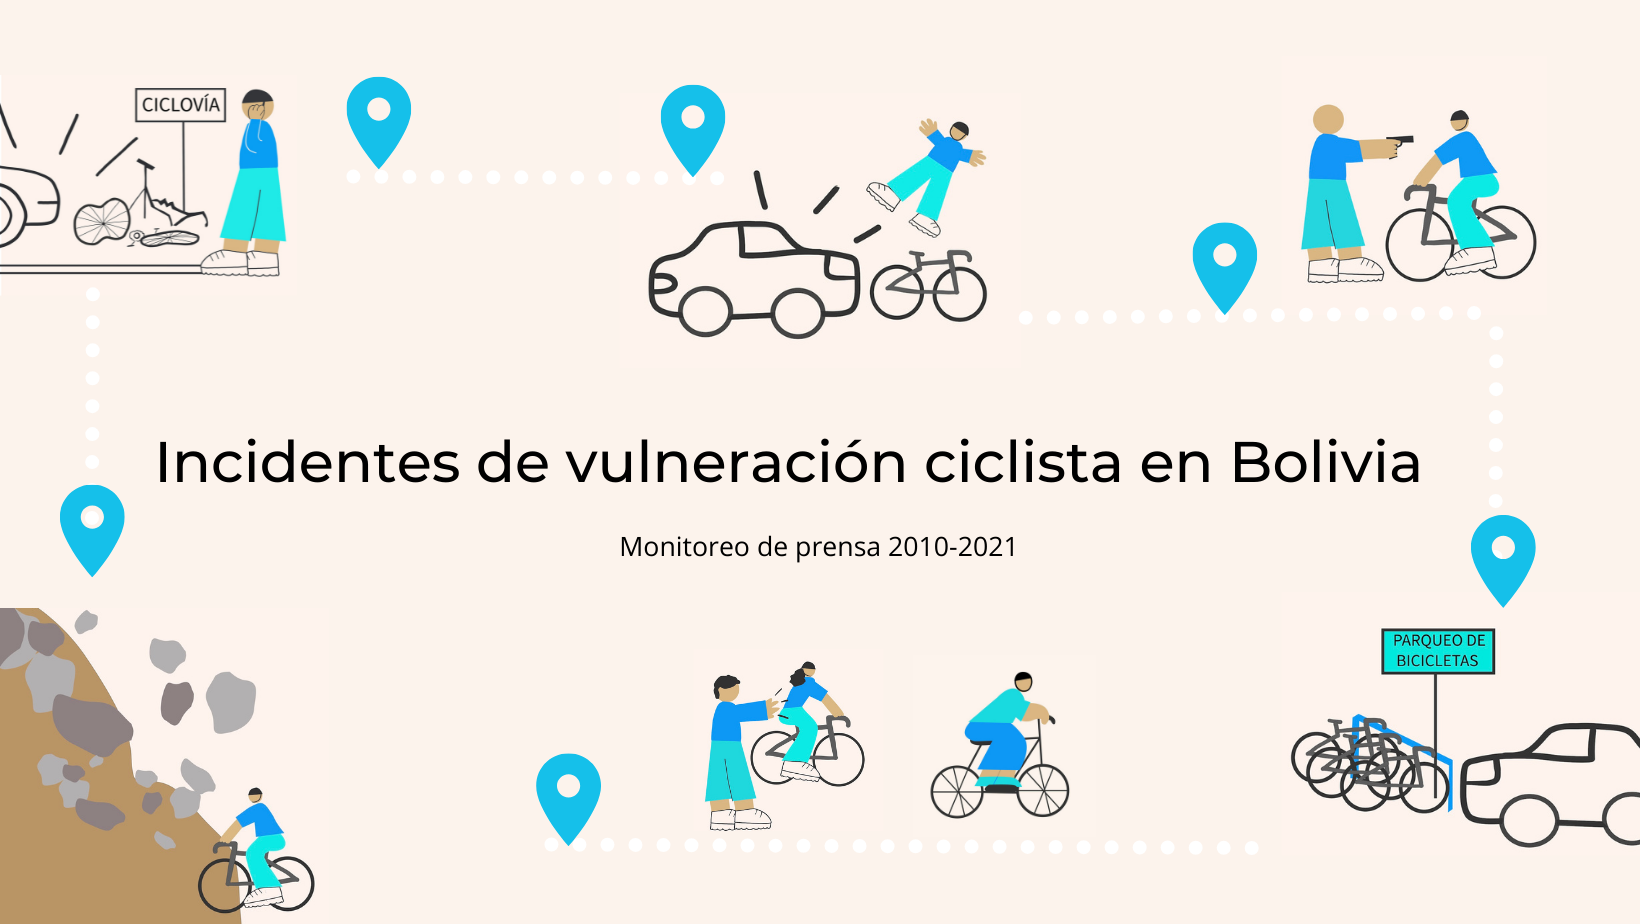 Vulneración ciclista en Bolivia